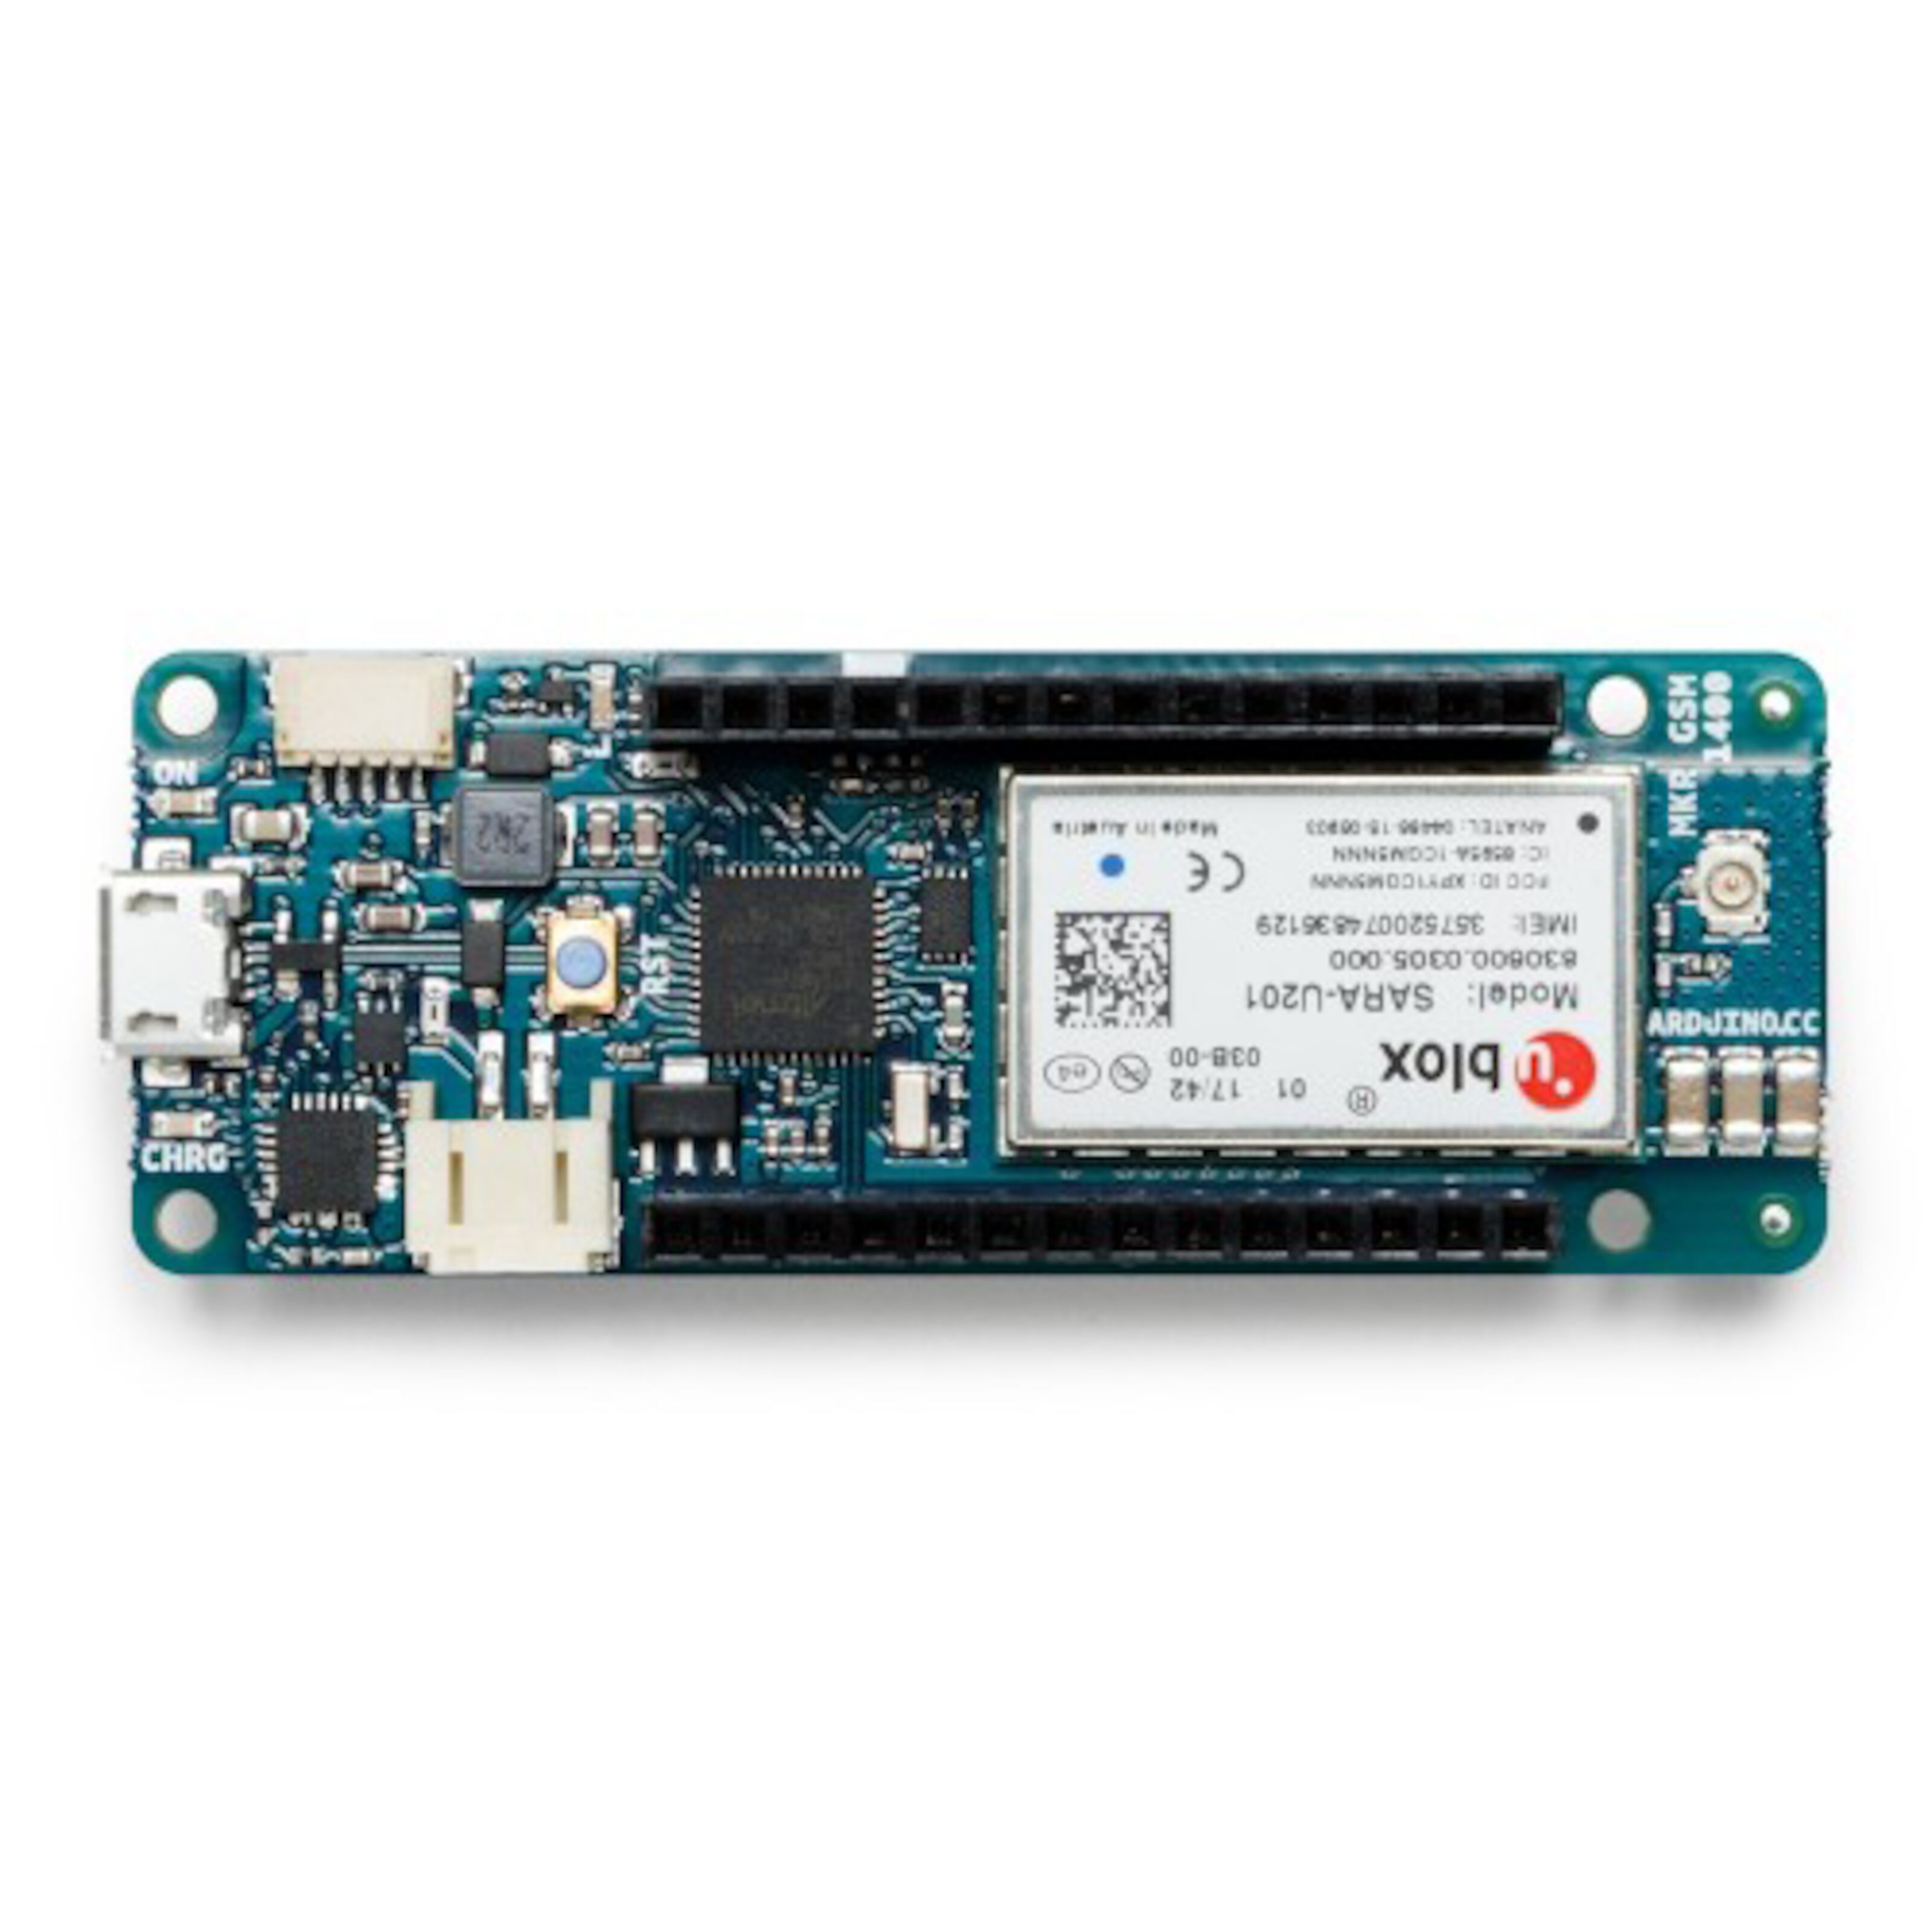 Arduino MKR GSM 1400 Entwicklungsboard neu in OVP inkl GSM Antenne 